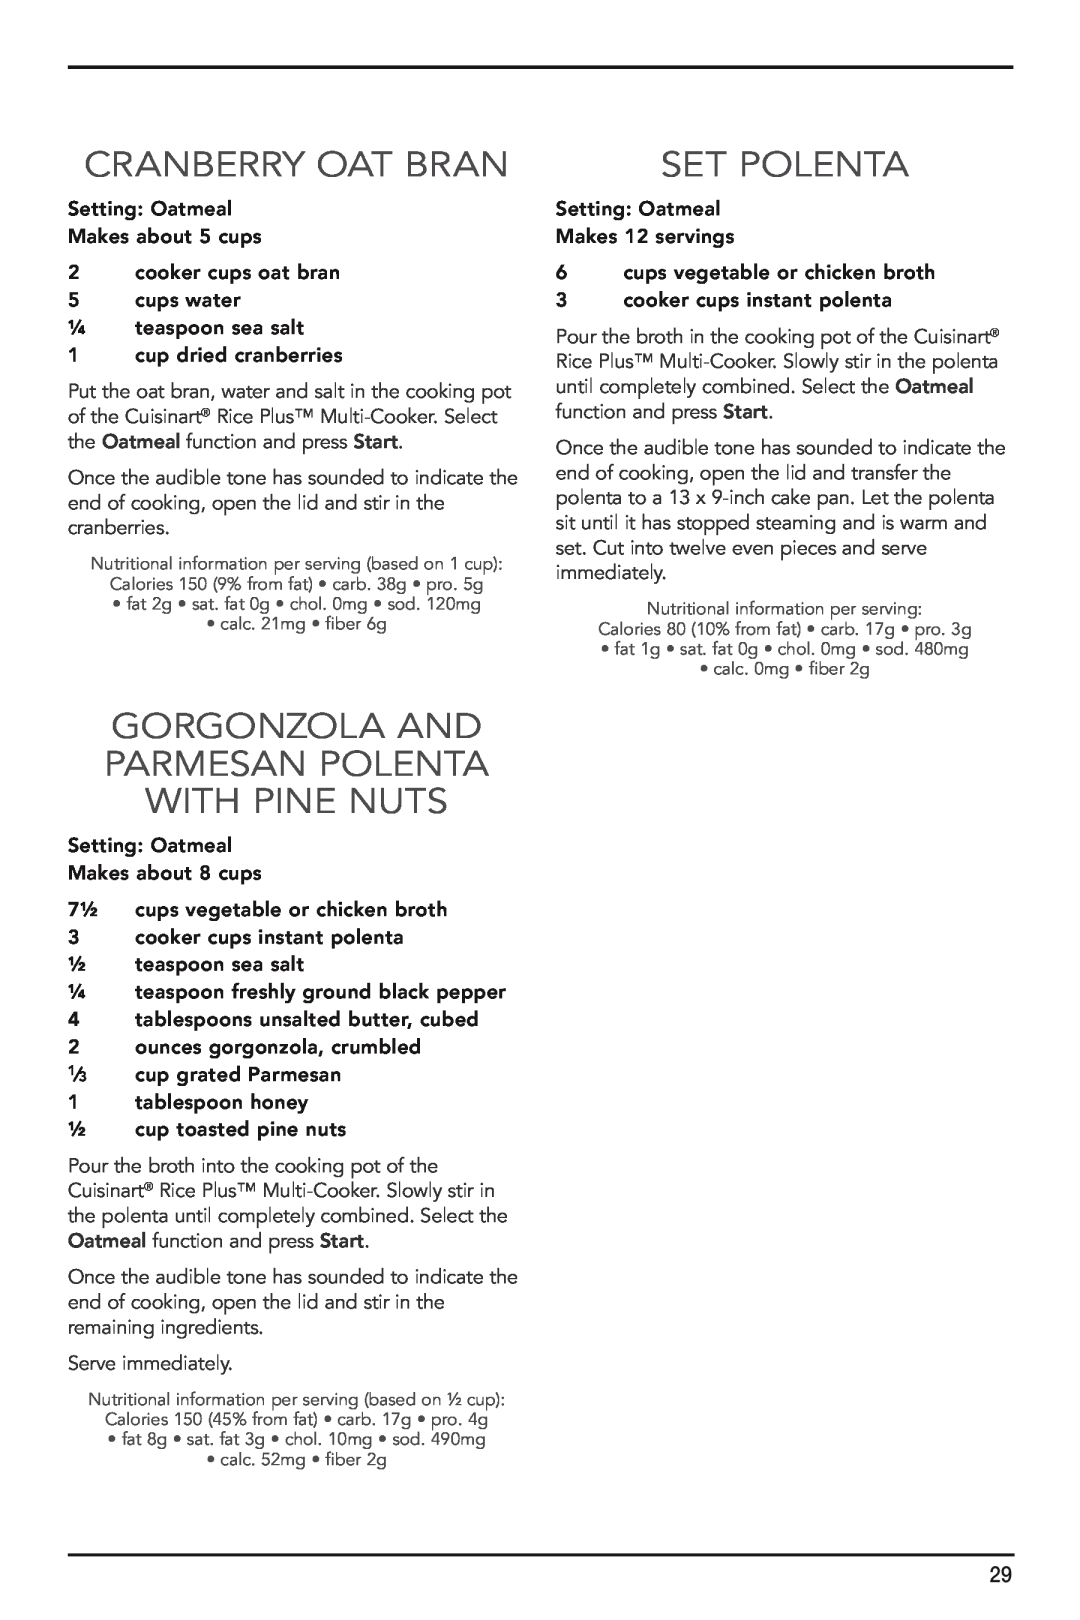 Cuisinart FRC-800 manual Cranberry Oat Bran, Gorgonzola and Parmesan Polenta with Pine Nuts, Set Polenta 